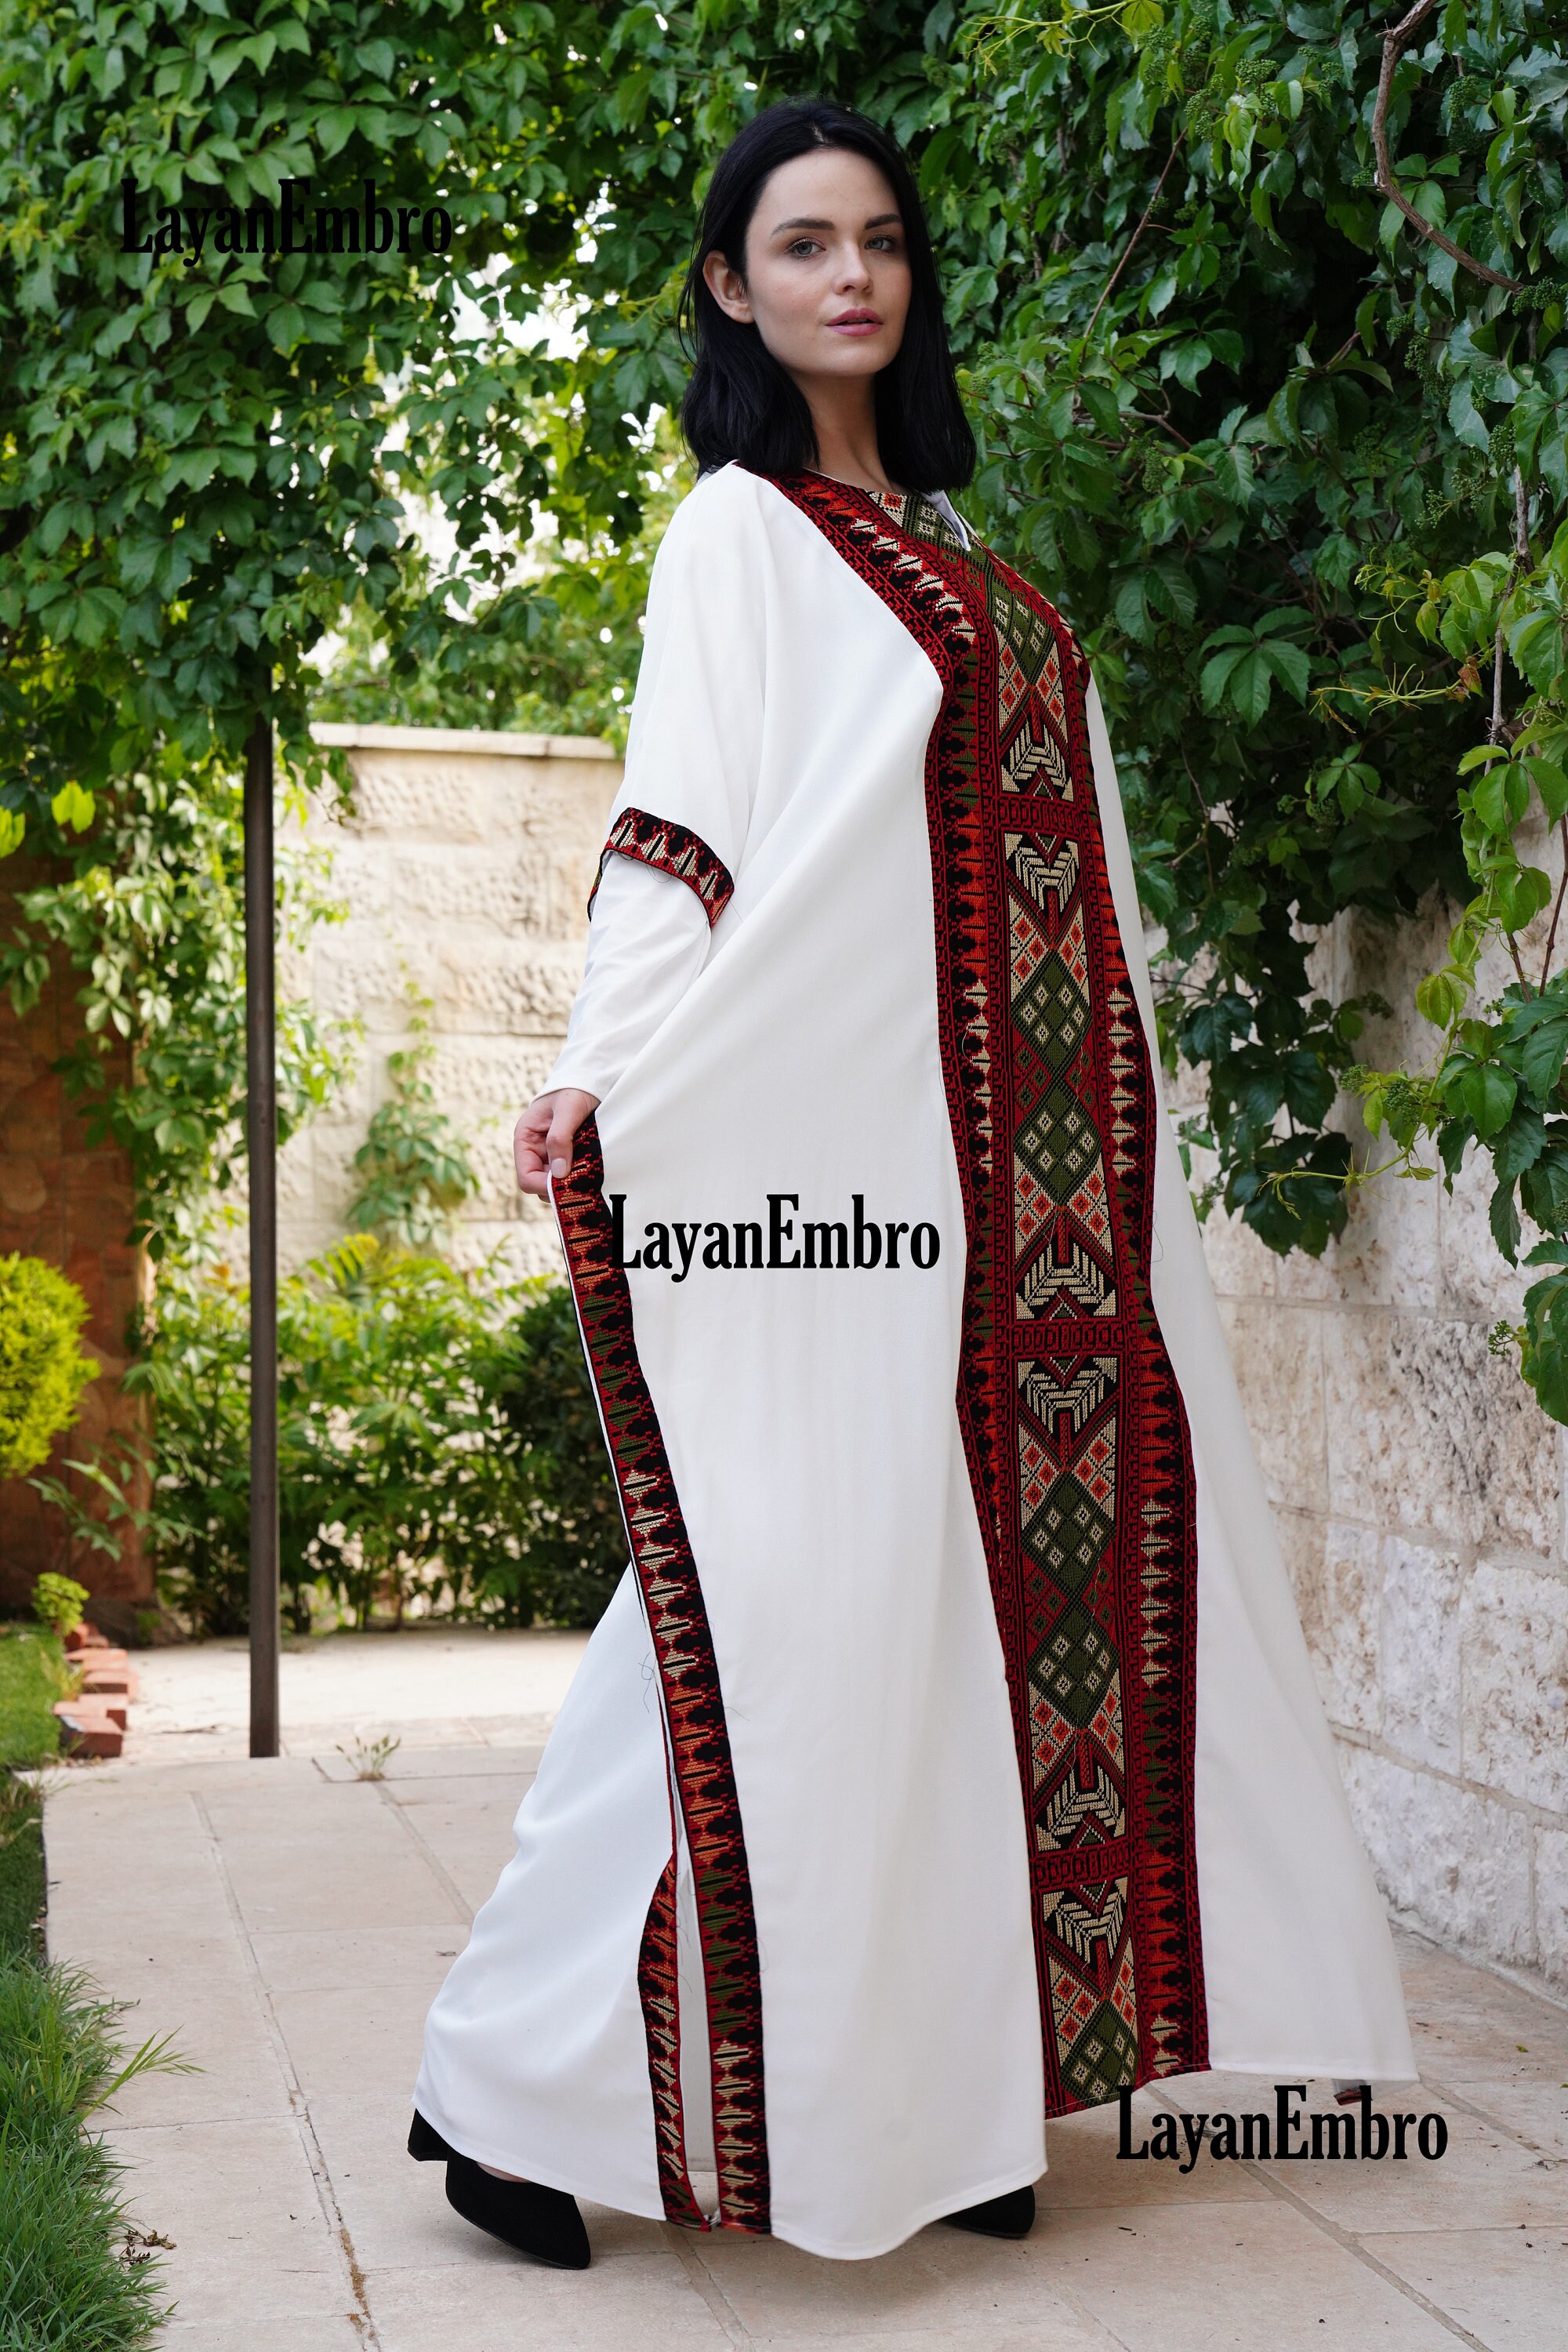 Very Beautiful Unique Embroidered Dress مطرزات شرقية عربية - Etsy